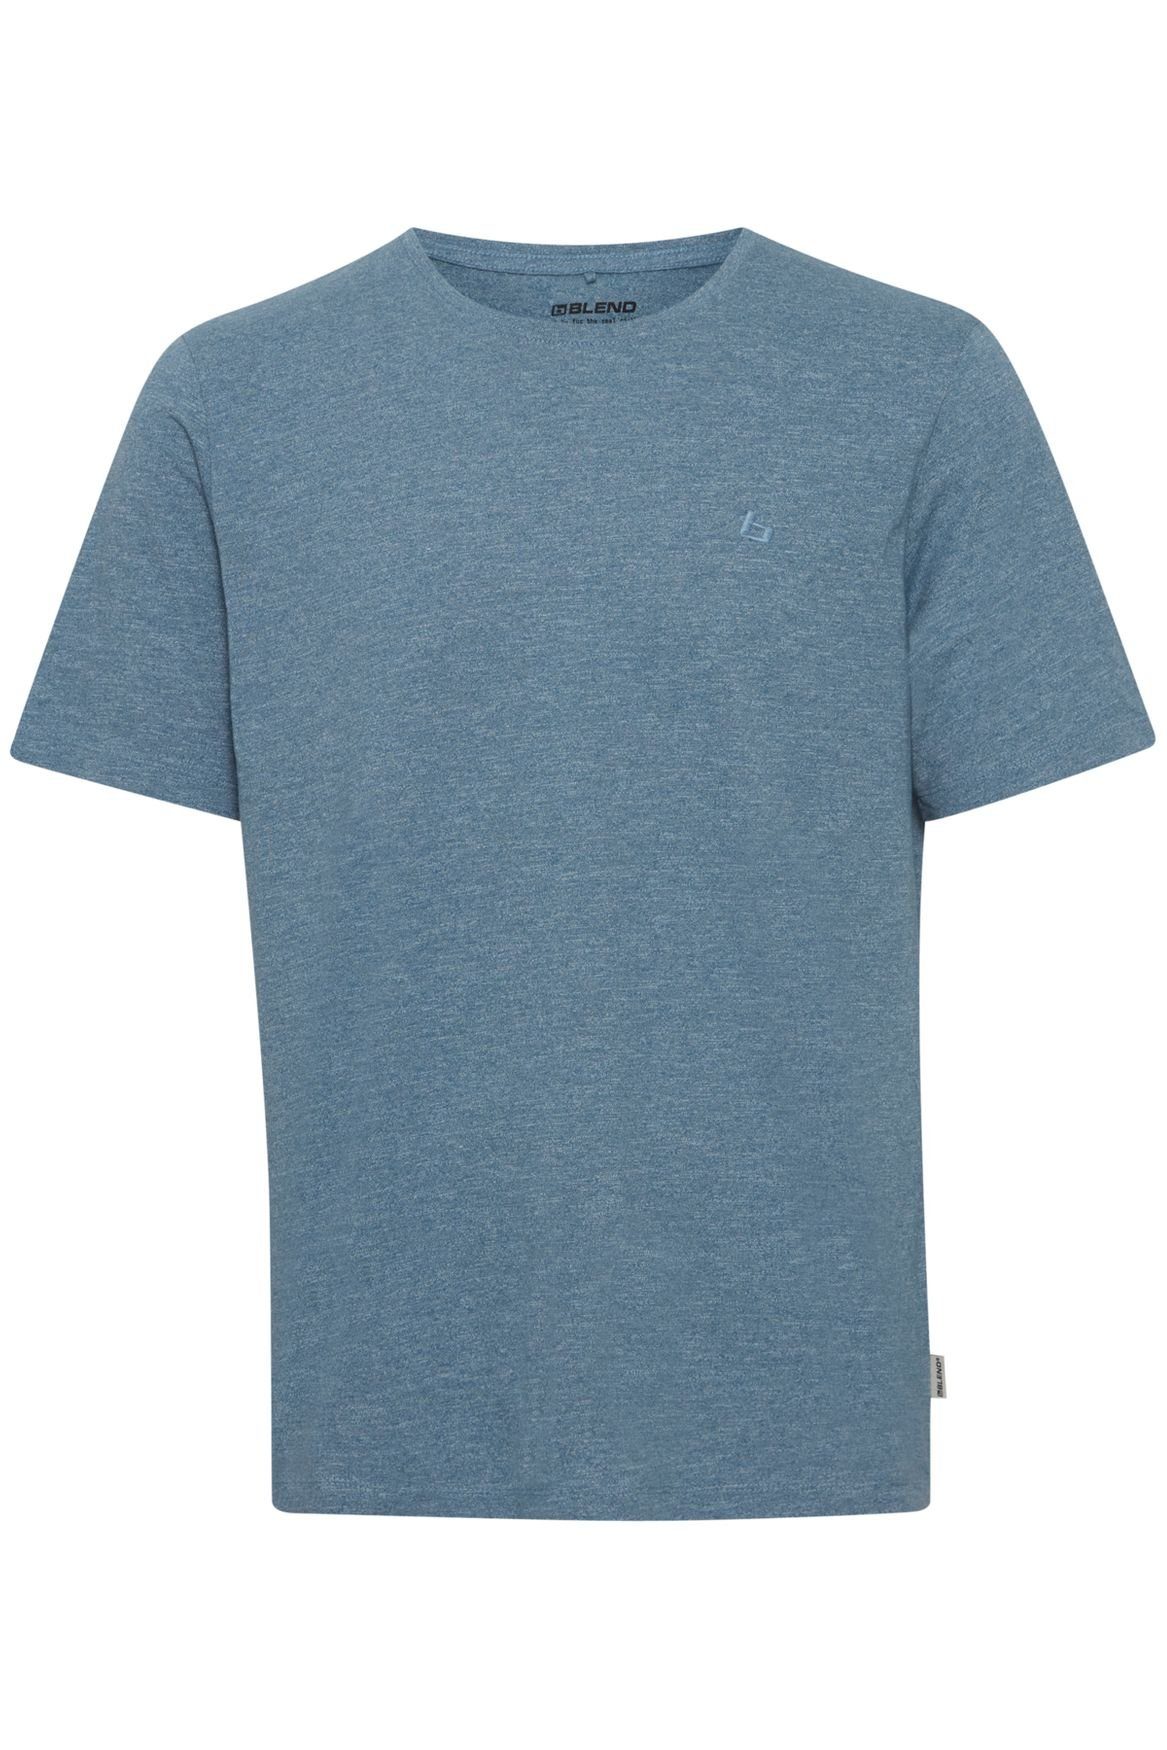 Blend T-Shirt Rundhals T-Shirt Kurzarm Shirt Blau in 5030 Stretch BHWilton